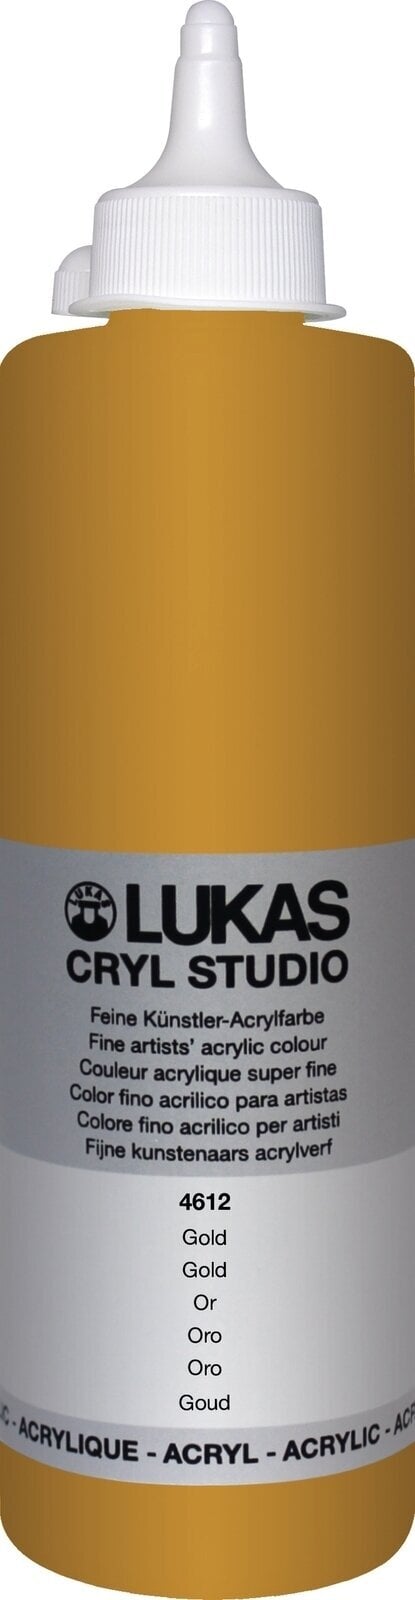 Akrylová farba Lukas Cryl Studio Acrylic Paint Plastic Bottle Akrylová farba Gold 500 ml 1 ks